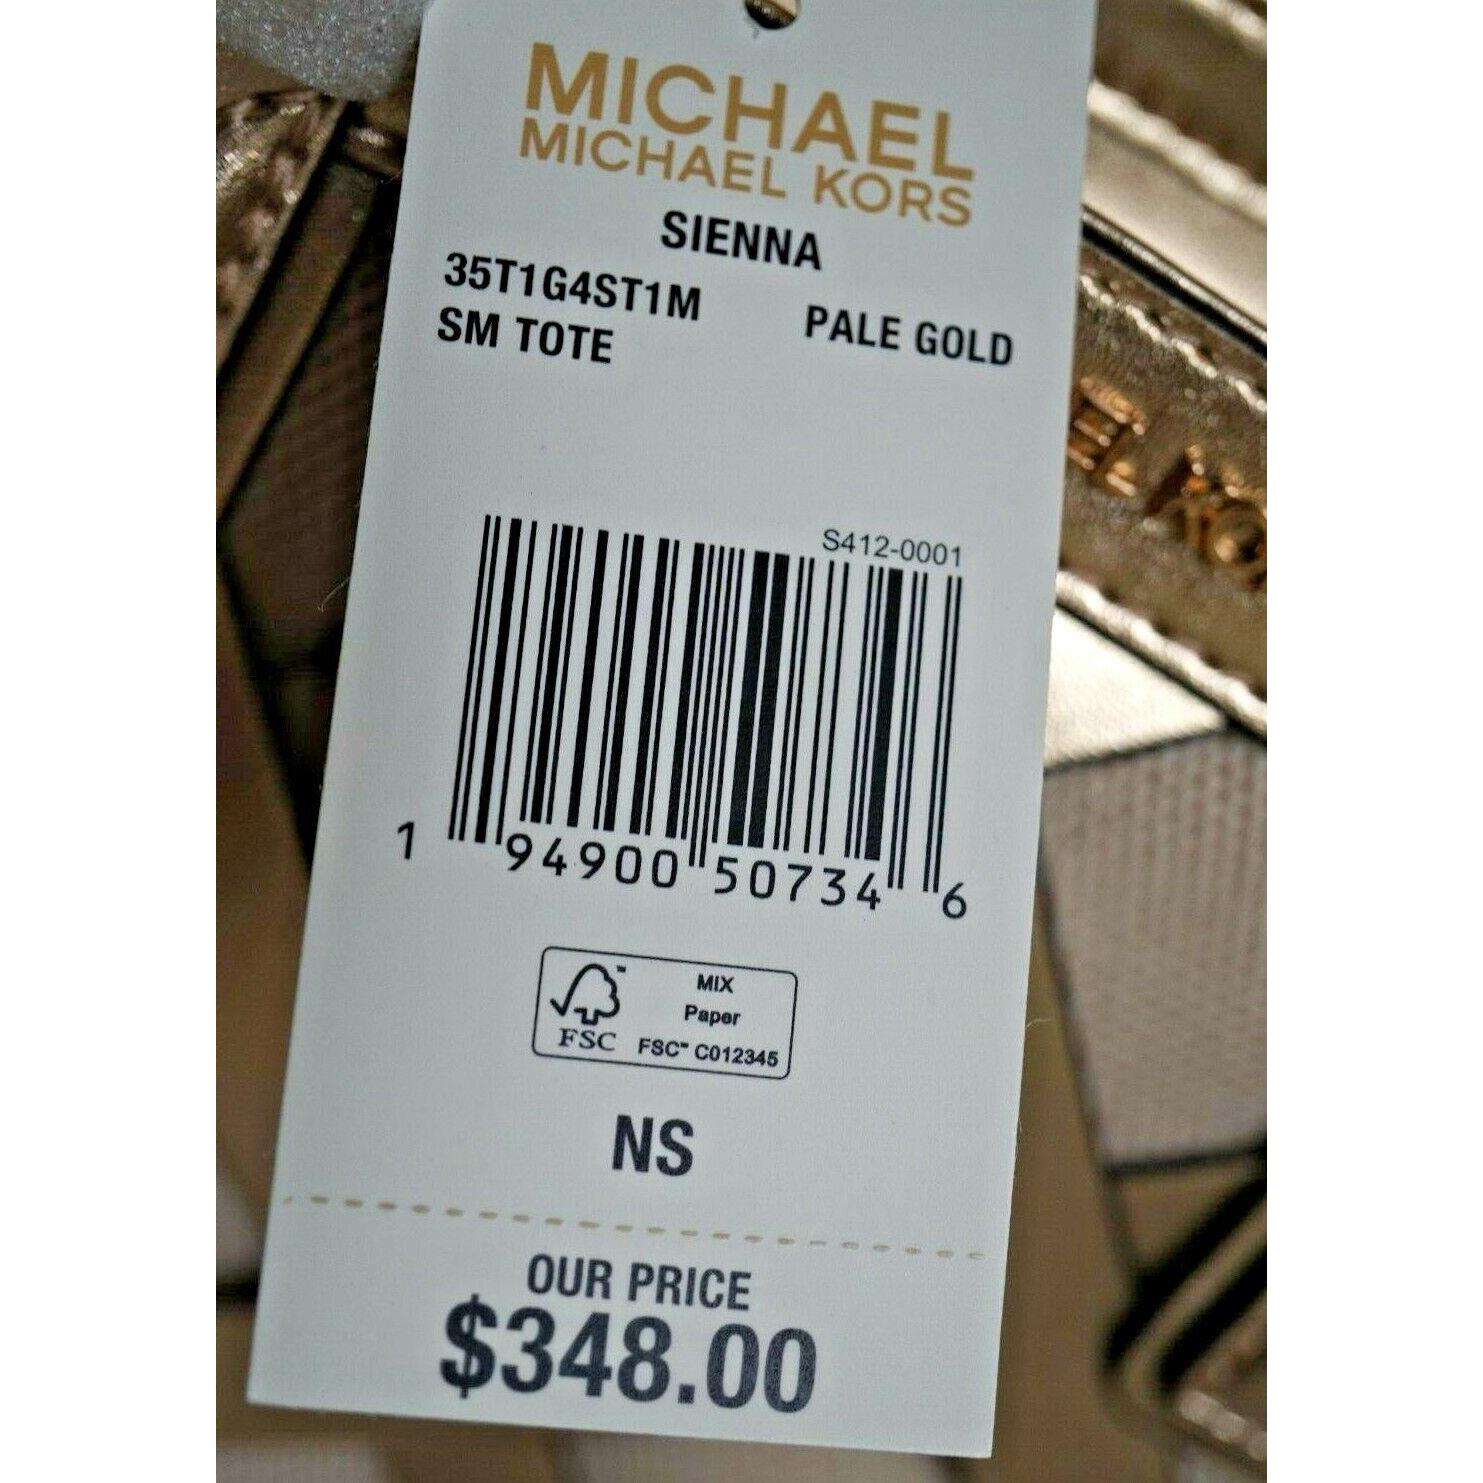 Michael Kors  bag  Sienna - Pale Gold / Gold Tone Hardware Exterior 9